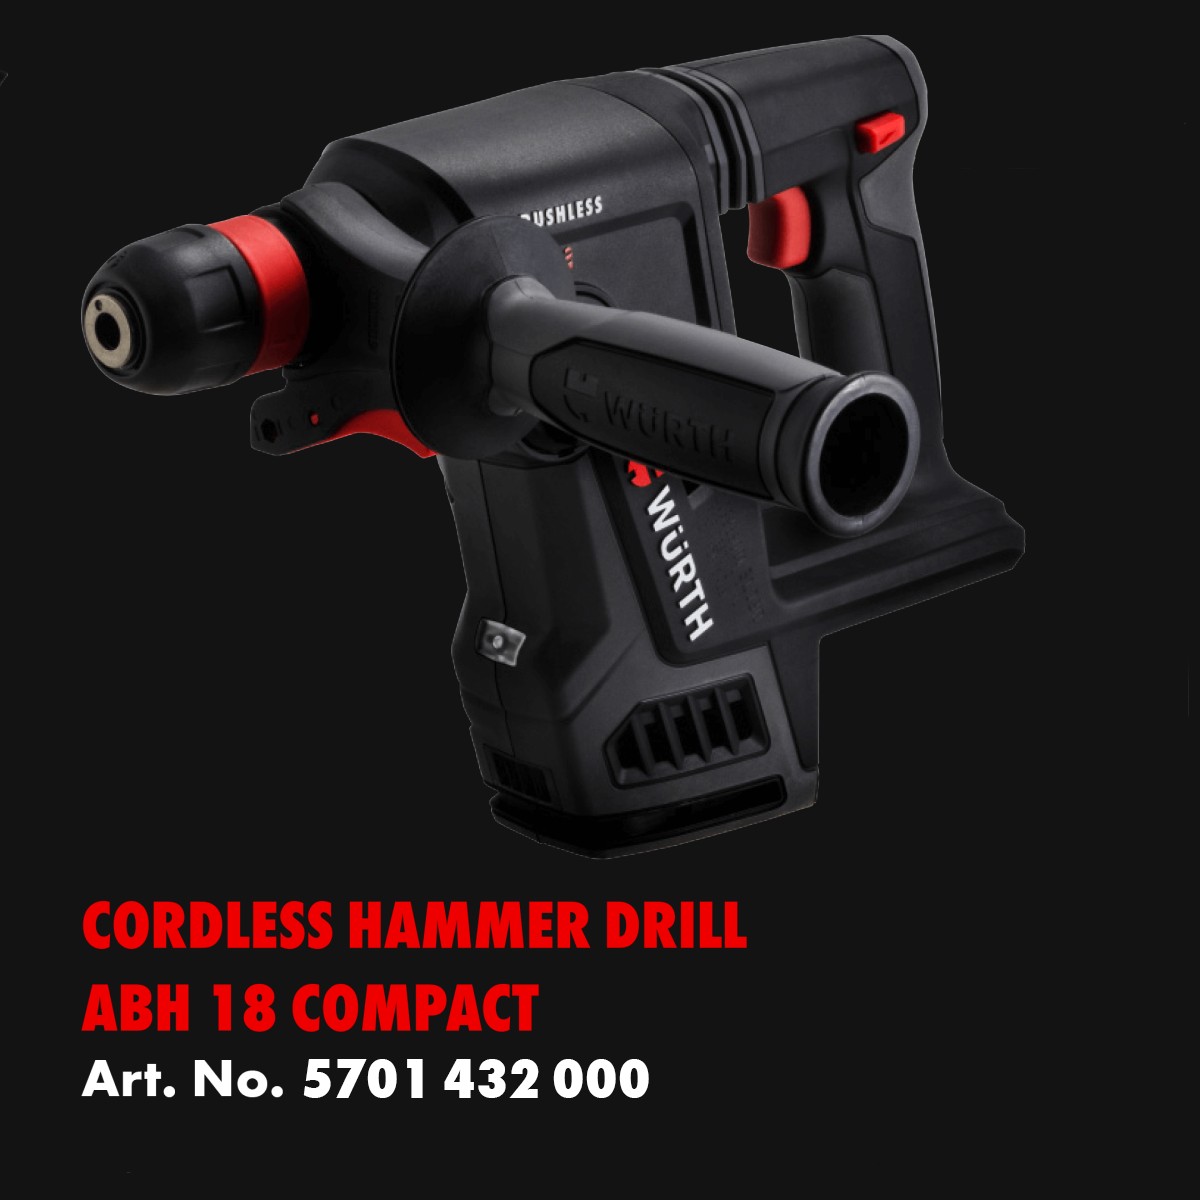 Cordless Hammer Drill ABH-18 Compact